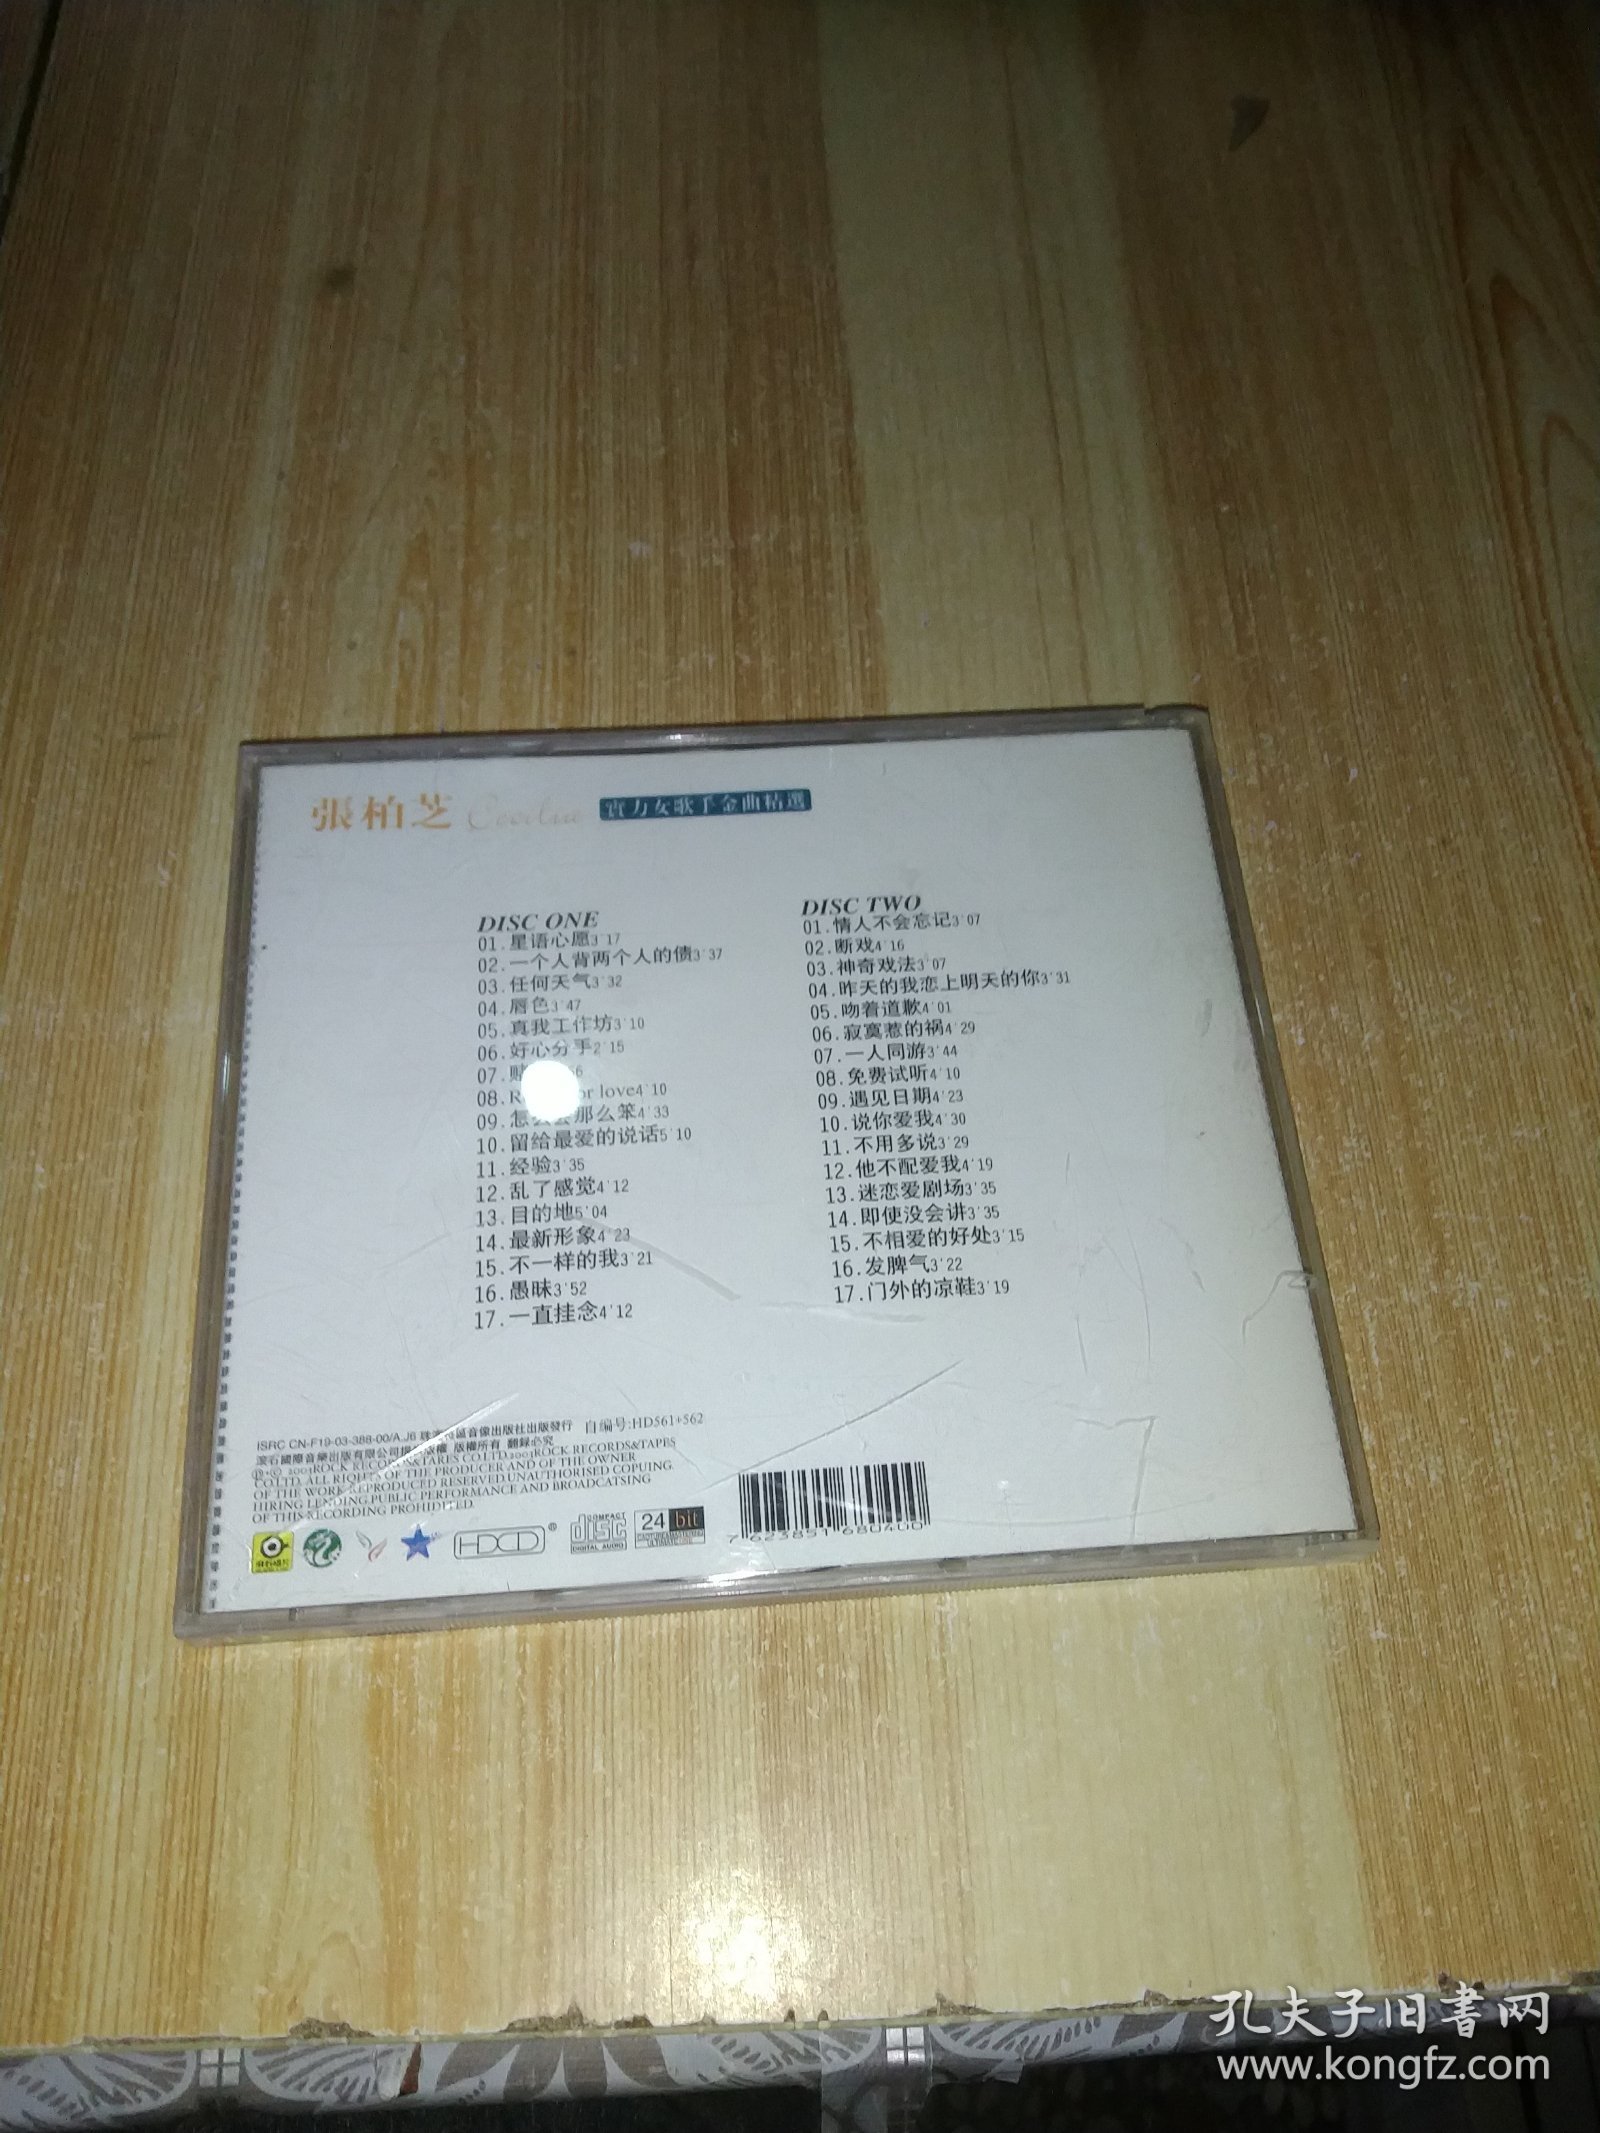 CD 张柏芝金曲精选 2CD